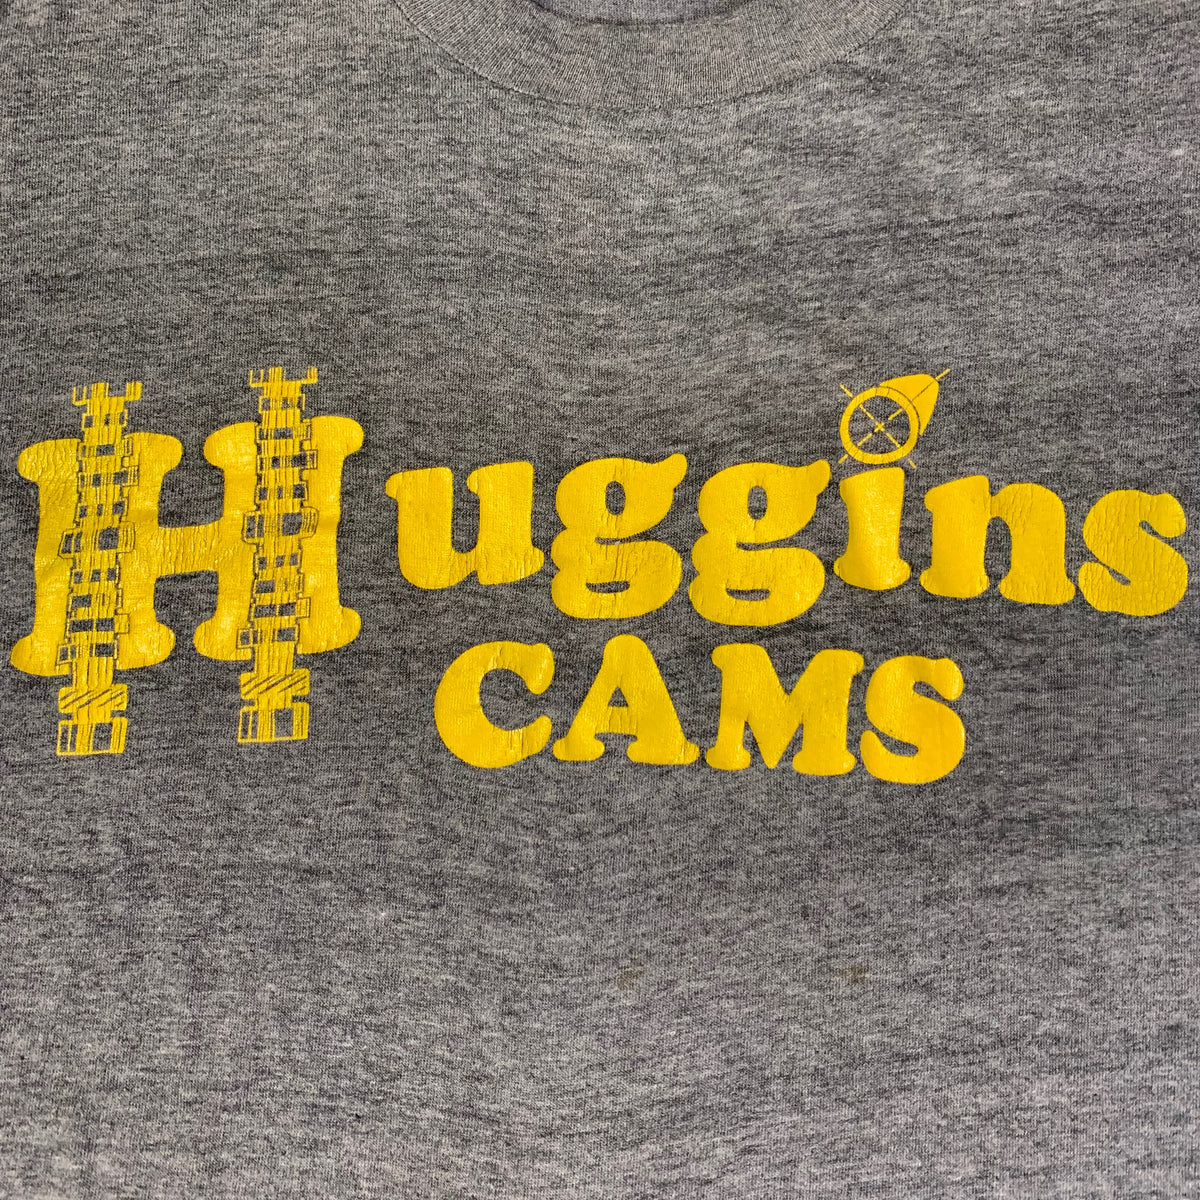 Vintage Huggins Cams &quot;Camshafts&quot; T-Shirt - jointcustodydc